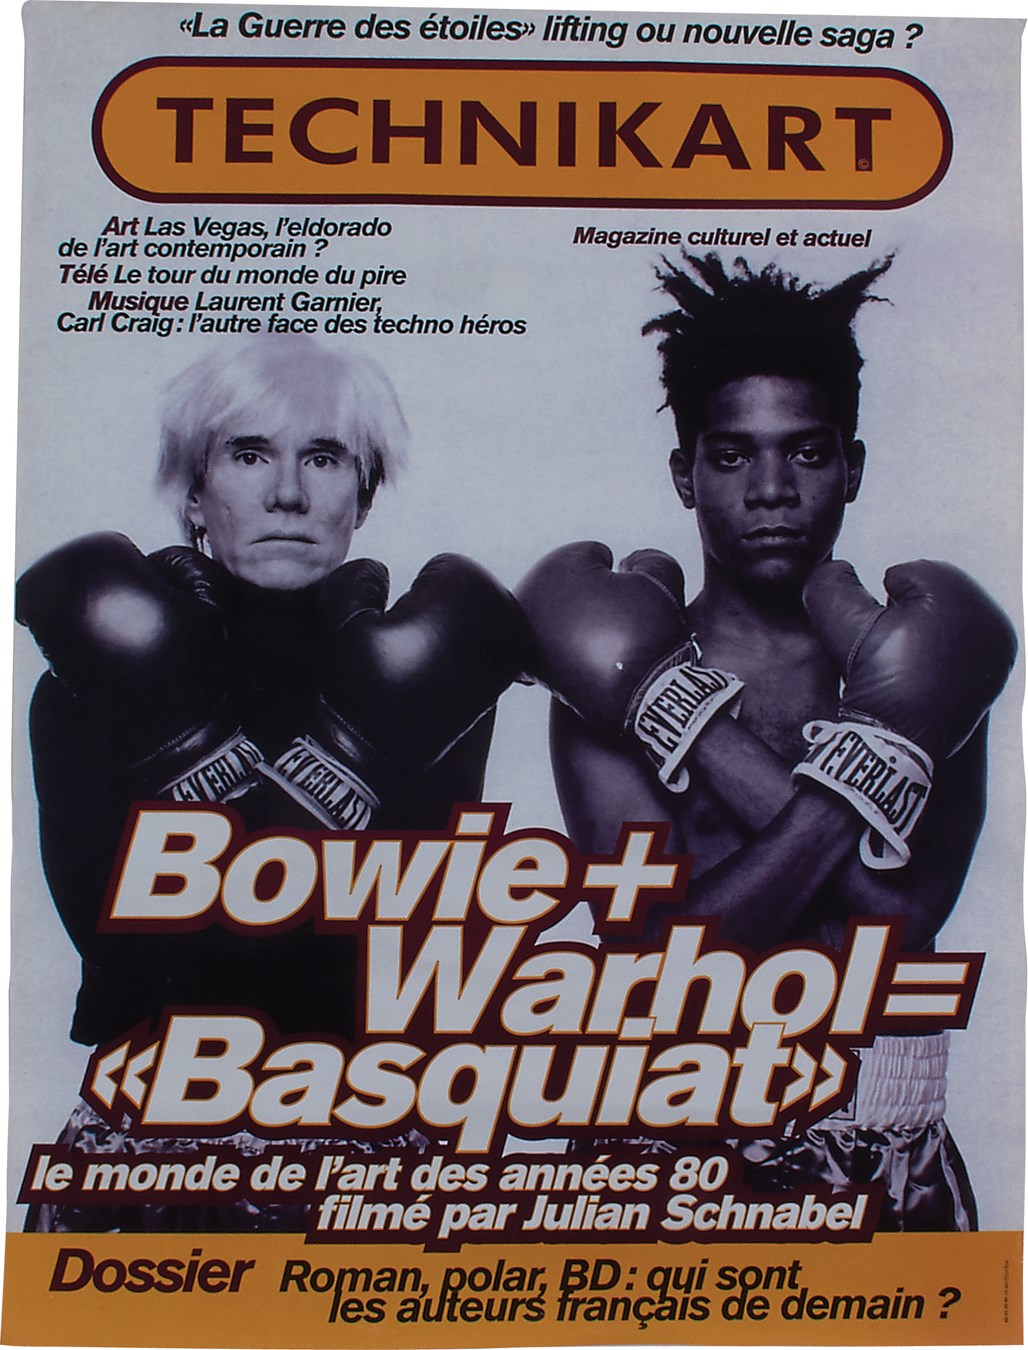 - 1996 Andy Warhol vs. John-Claude Basquiat Exhibition Poster